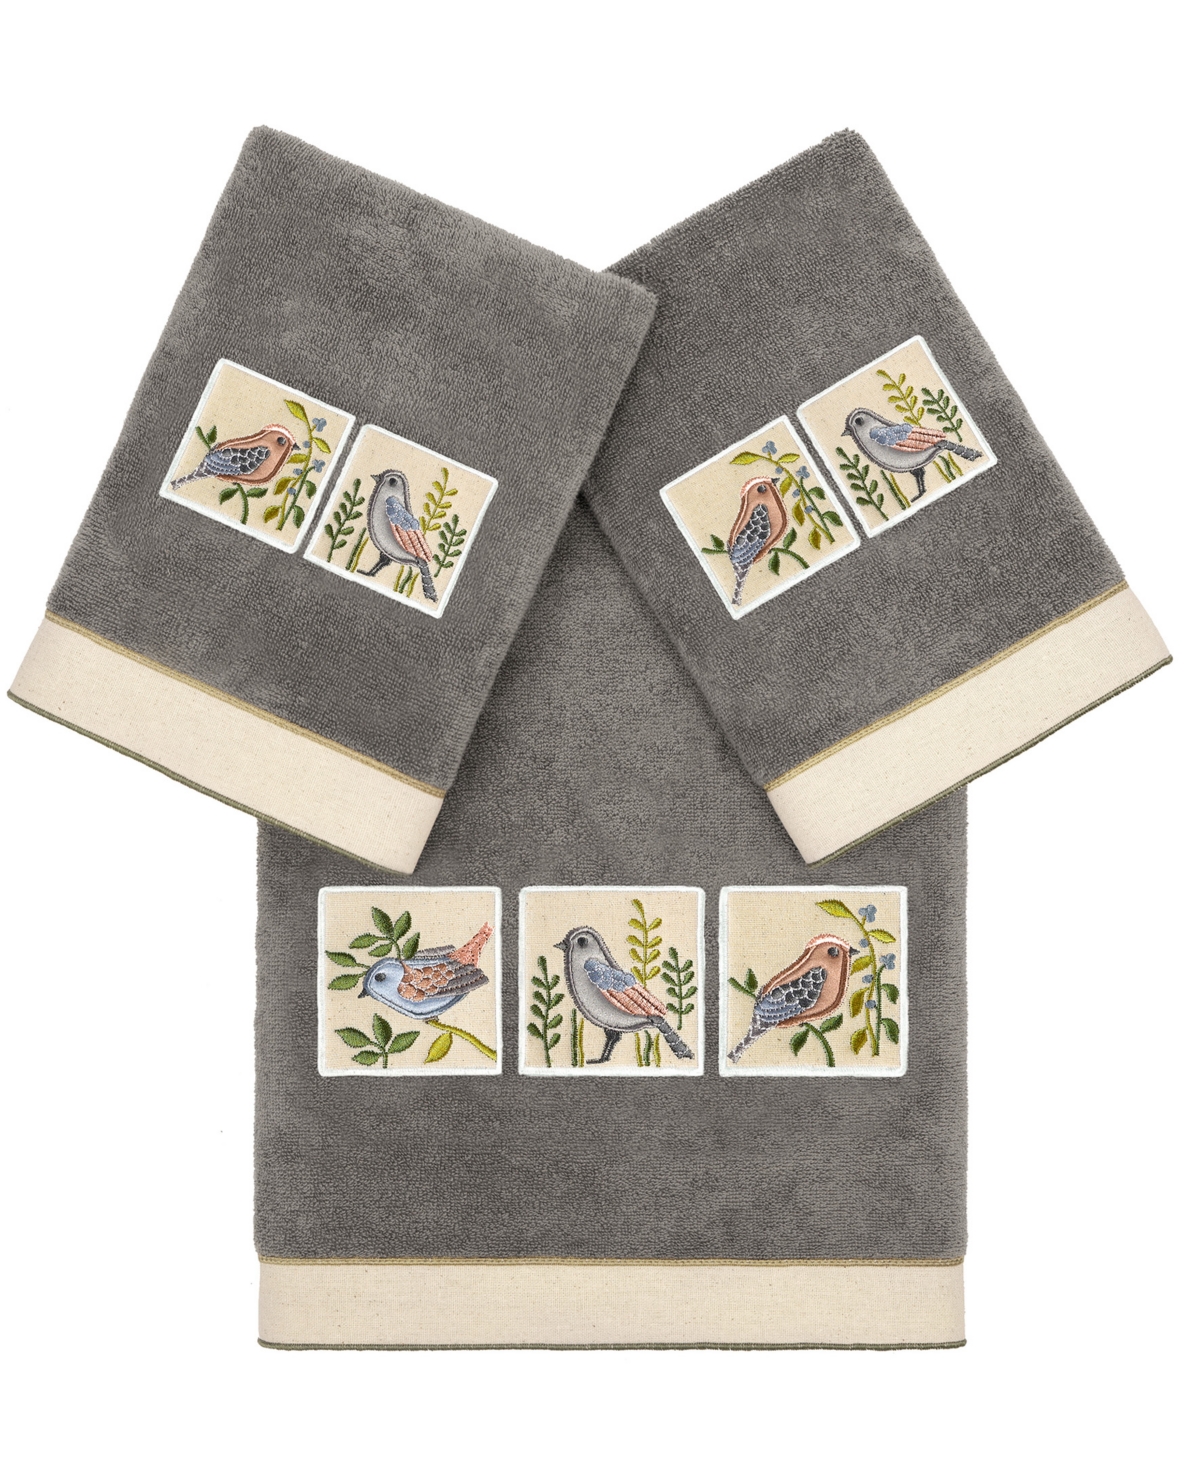 Linum Home Textiles Turkish Cotton Belinda Embellished Towel Set, 3 Piece In Charcoal